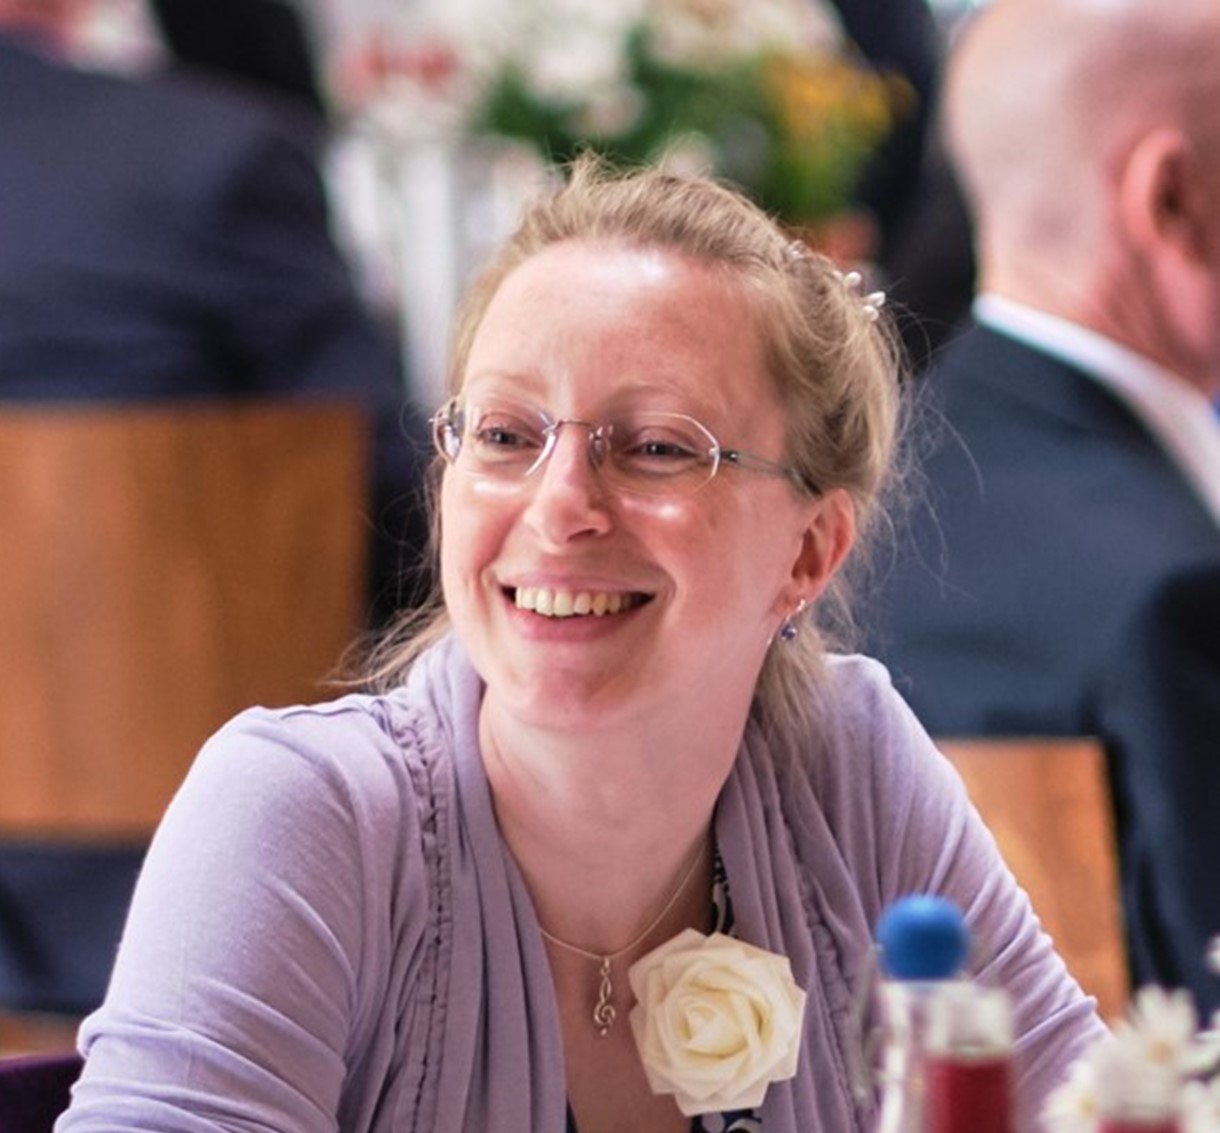 A photo of Deborah Walton smiling